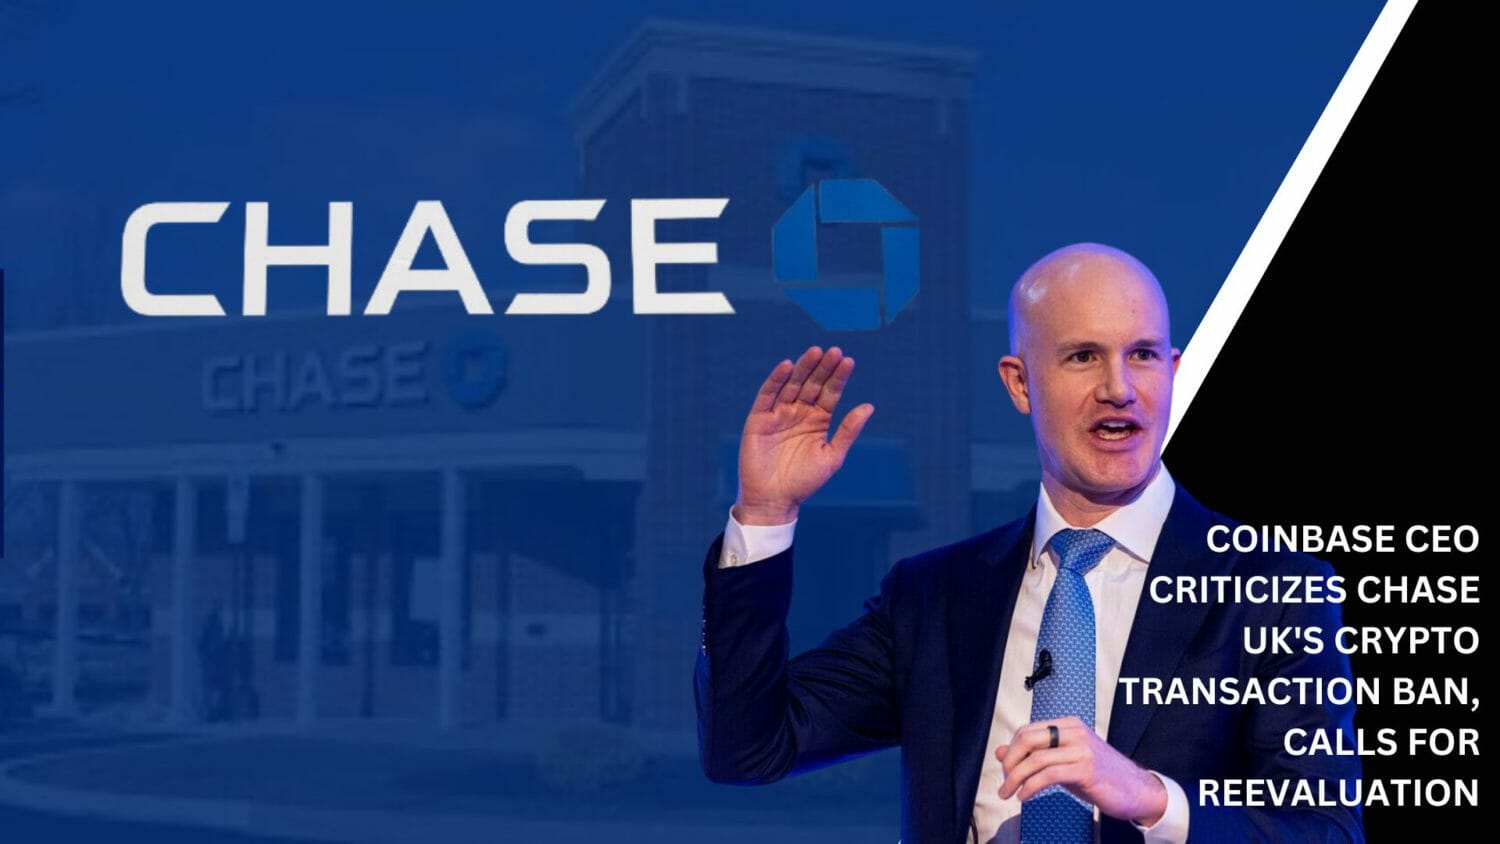 Coinbase CEO Criticizes Chase UK’s Crypto Transaction Ban, Calls for Reevaluation